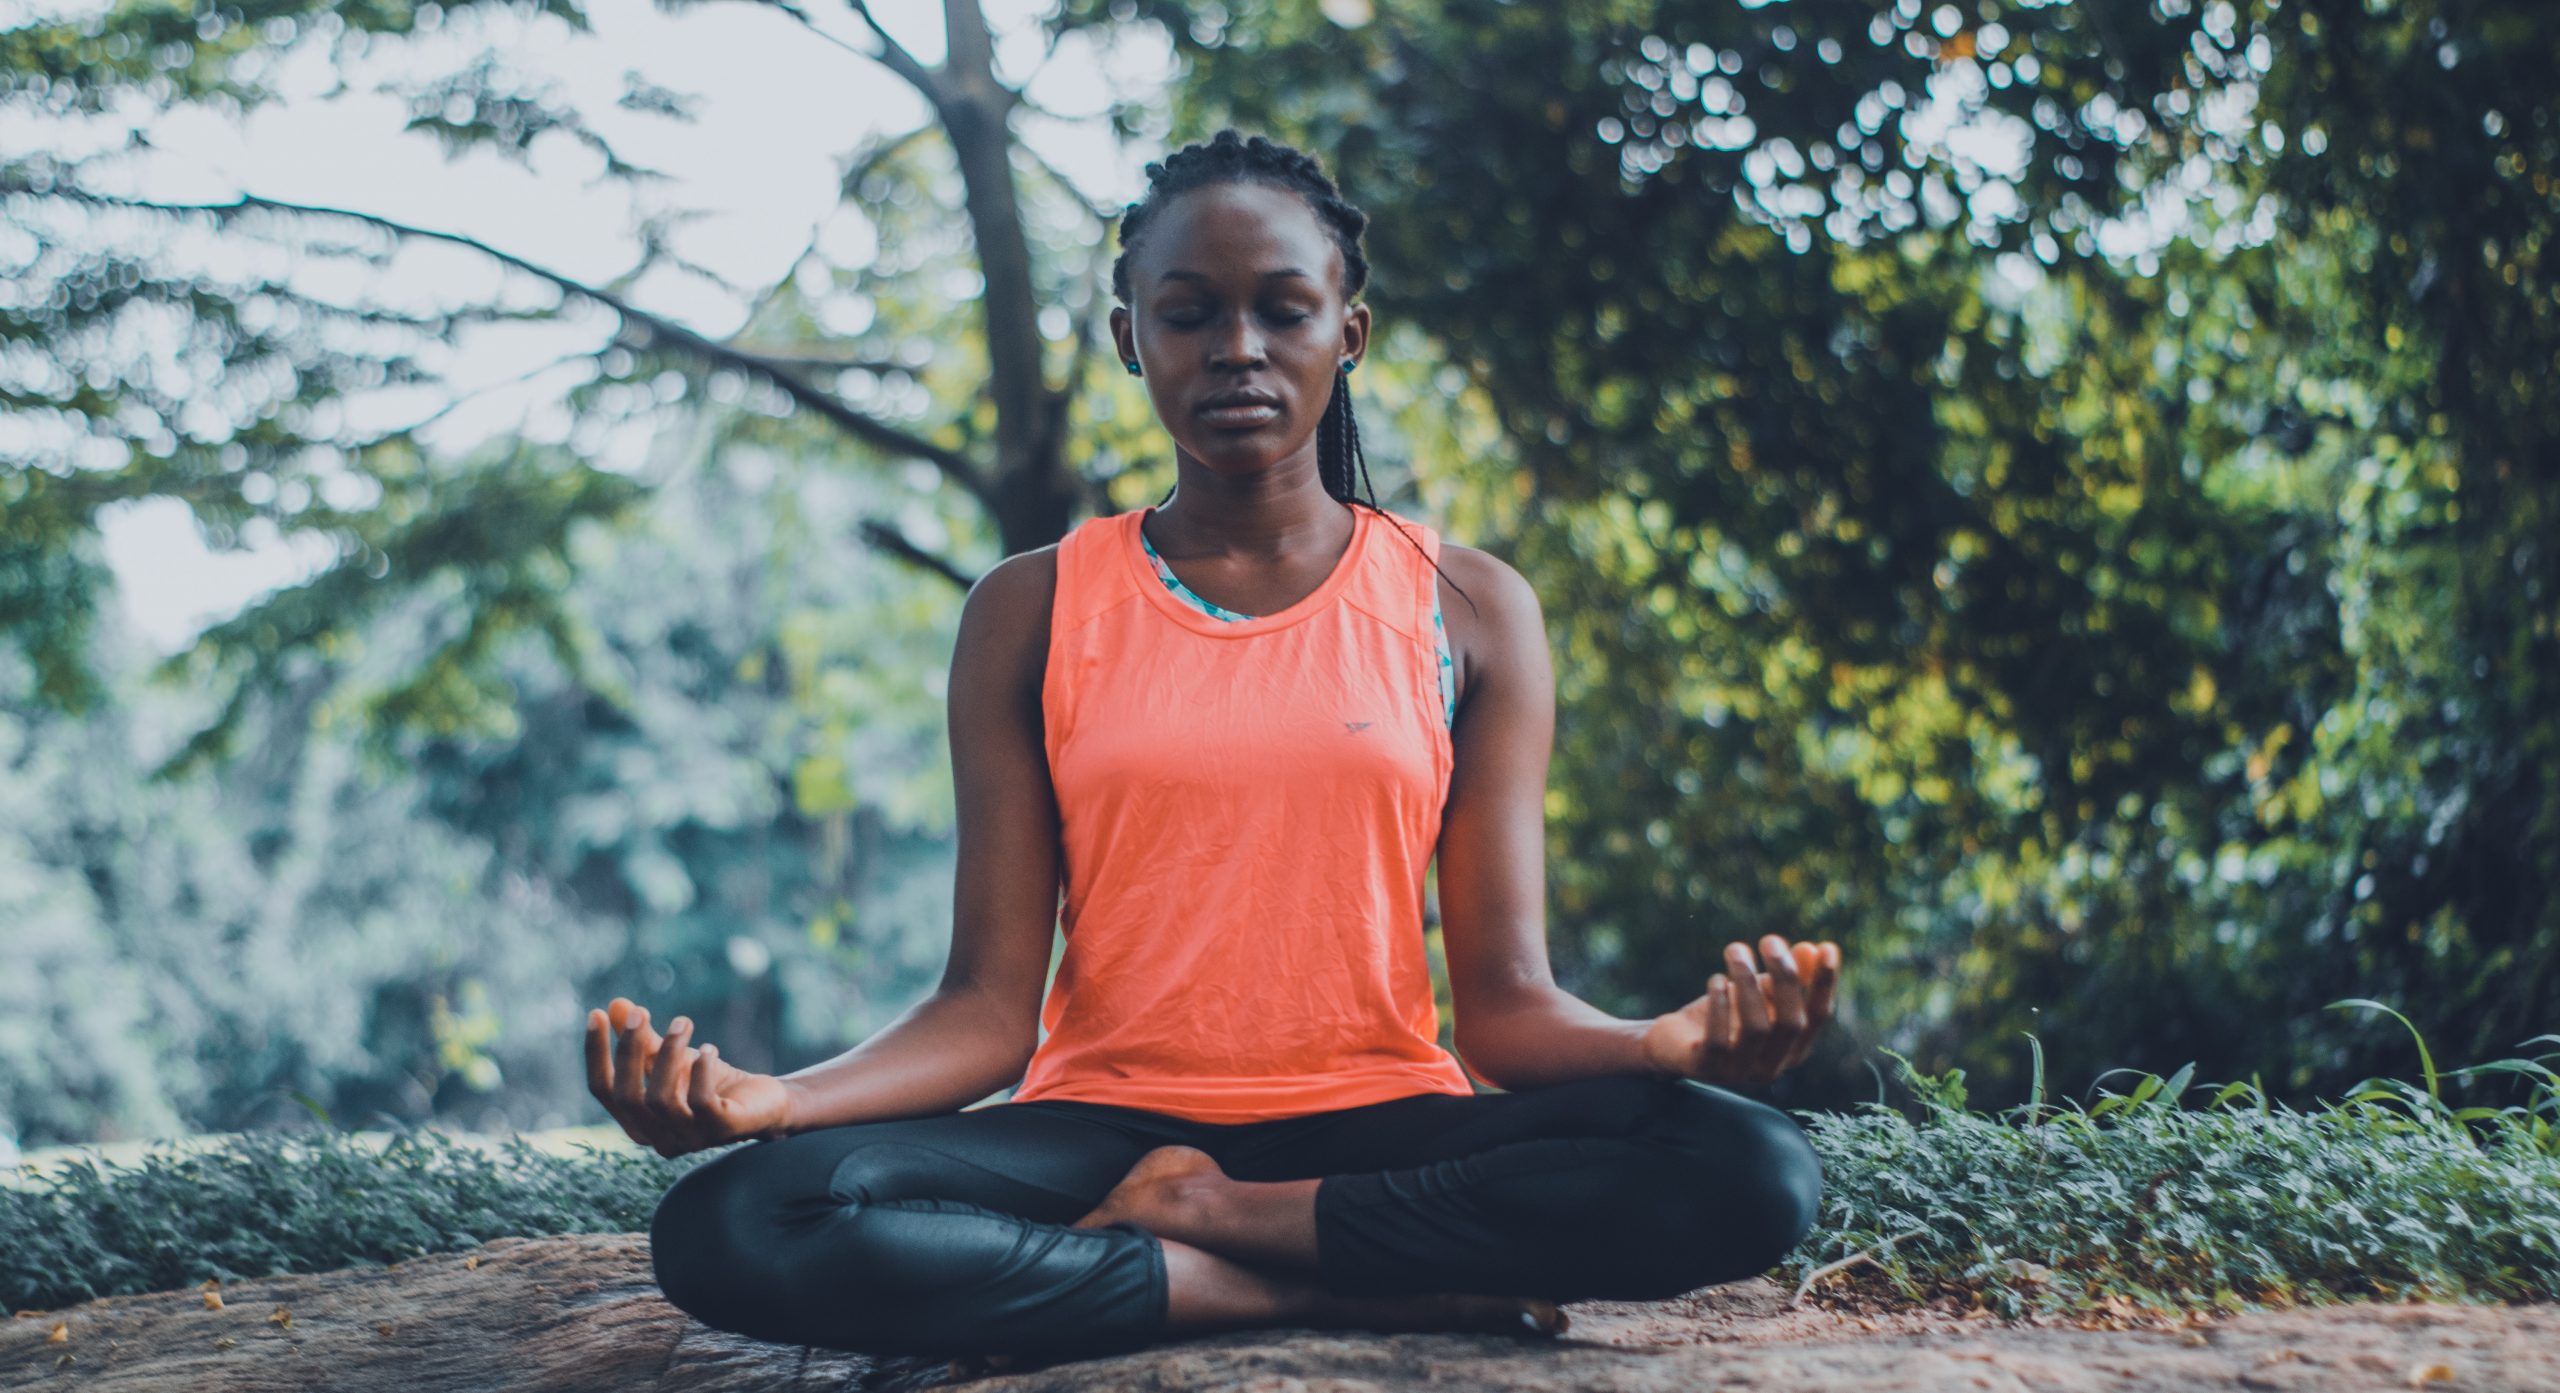 Woman meditating PYR Yoga. Image by Oluremi Adebayo, Pexels